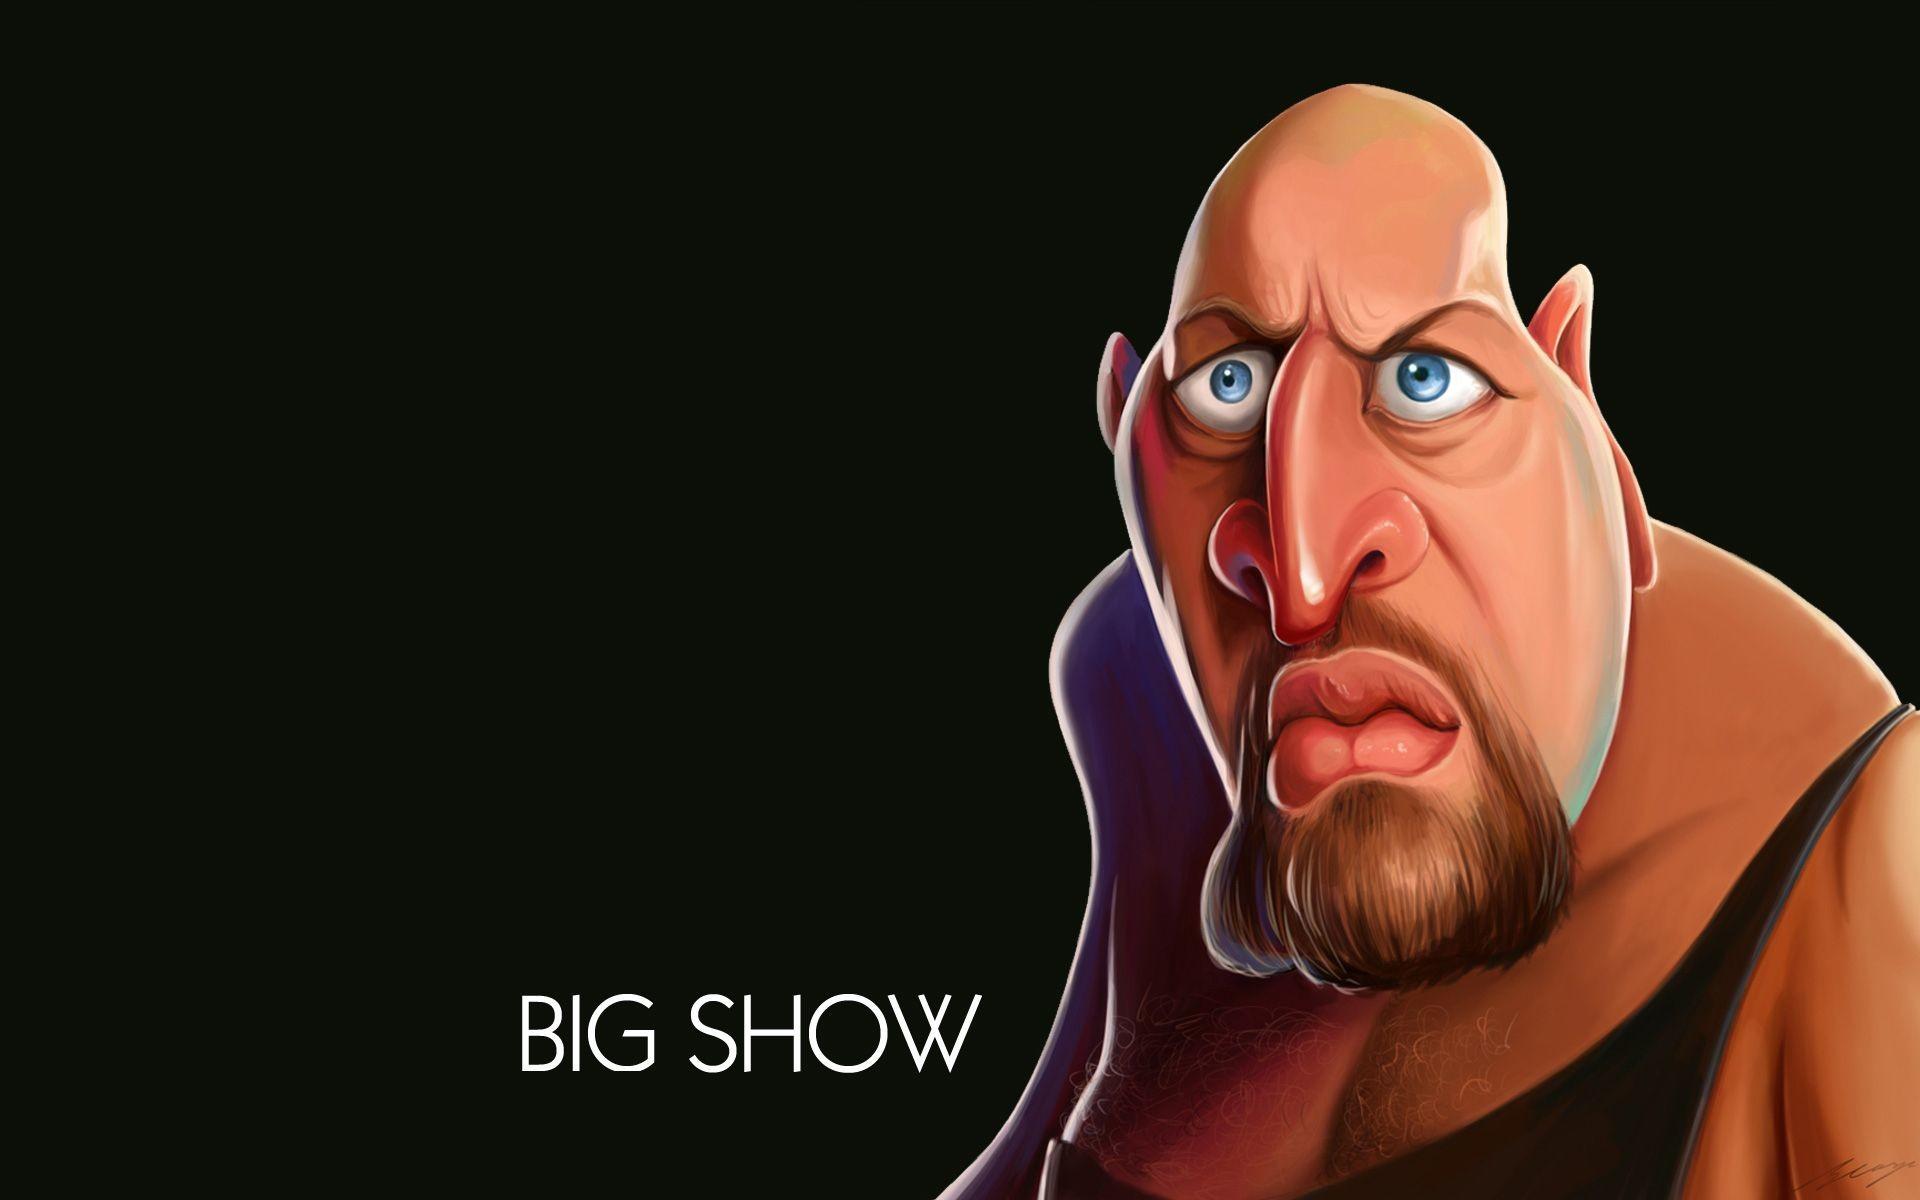 Wwe Big Show Wallpaper Download The Best HD Wallpaper